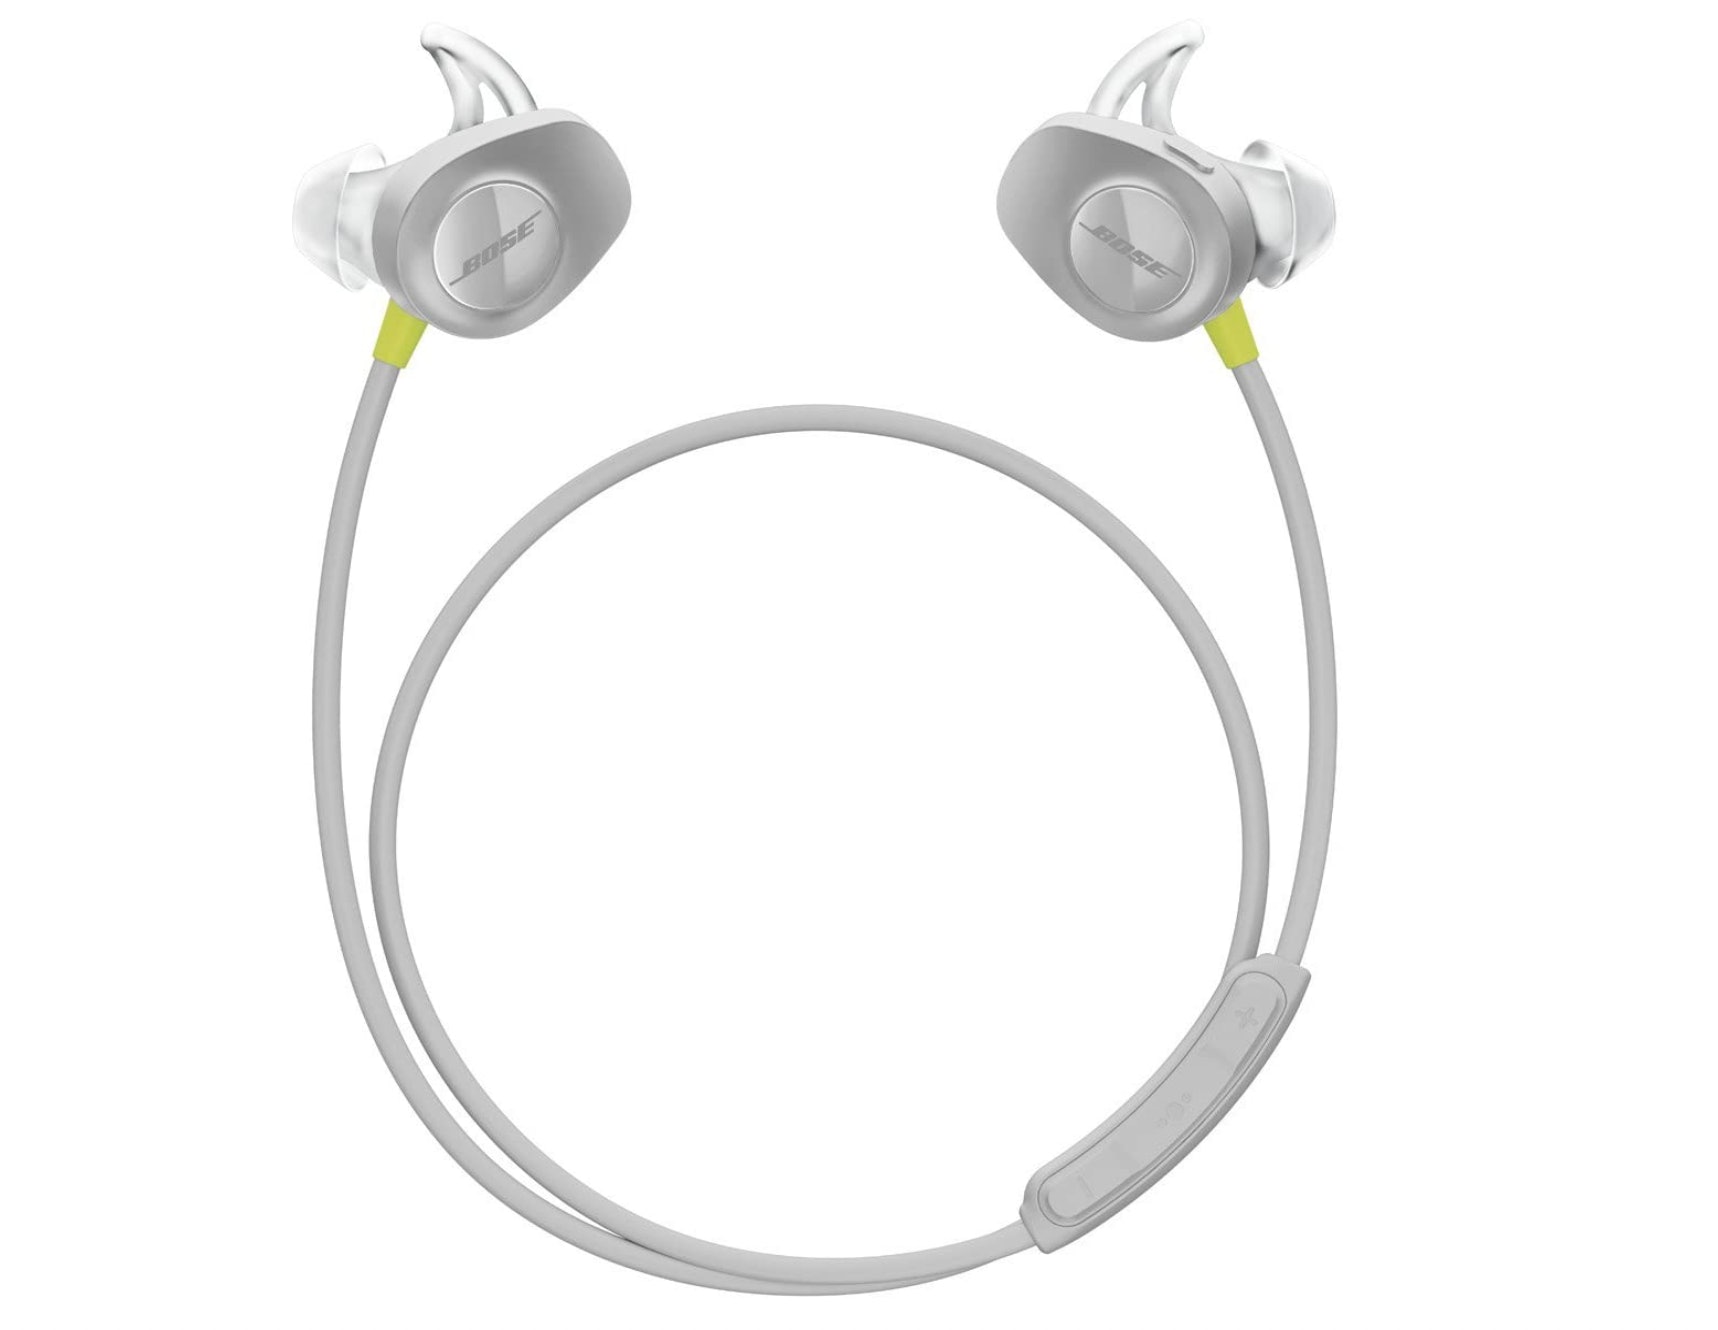 4 najbolje slušalice s trakom za vrat